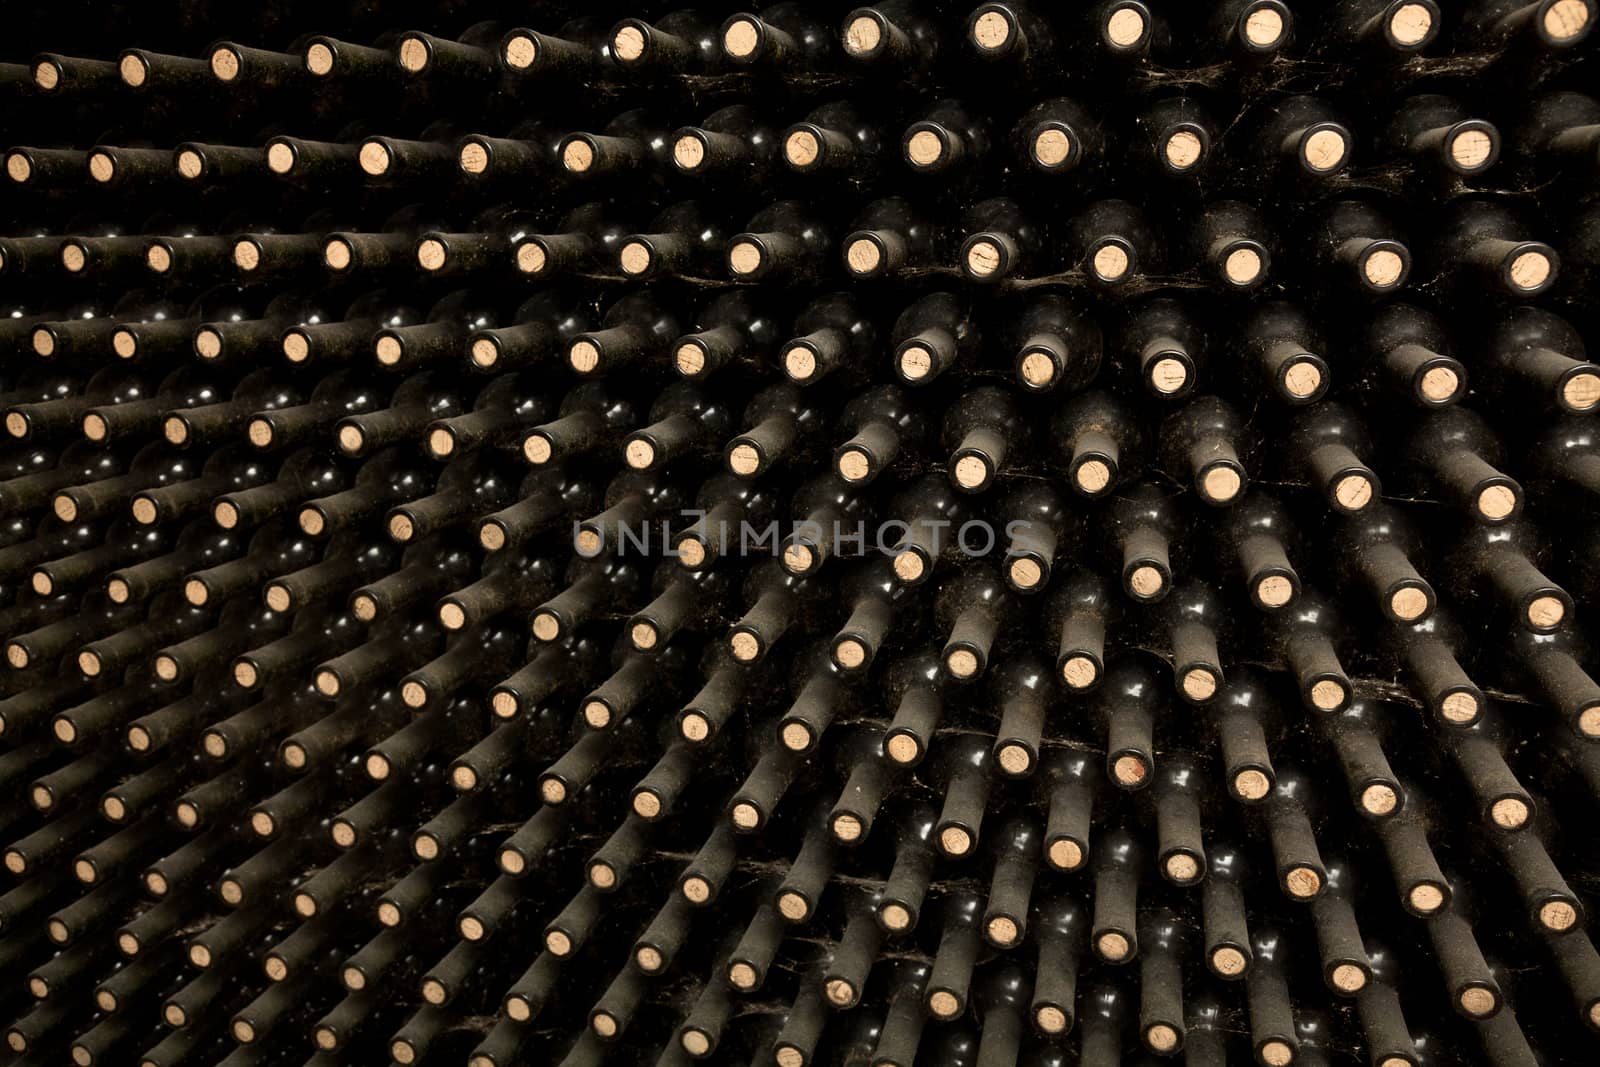 Old wine bottles by Portokalis